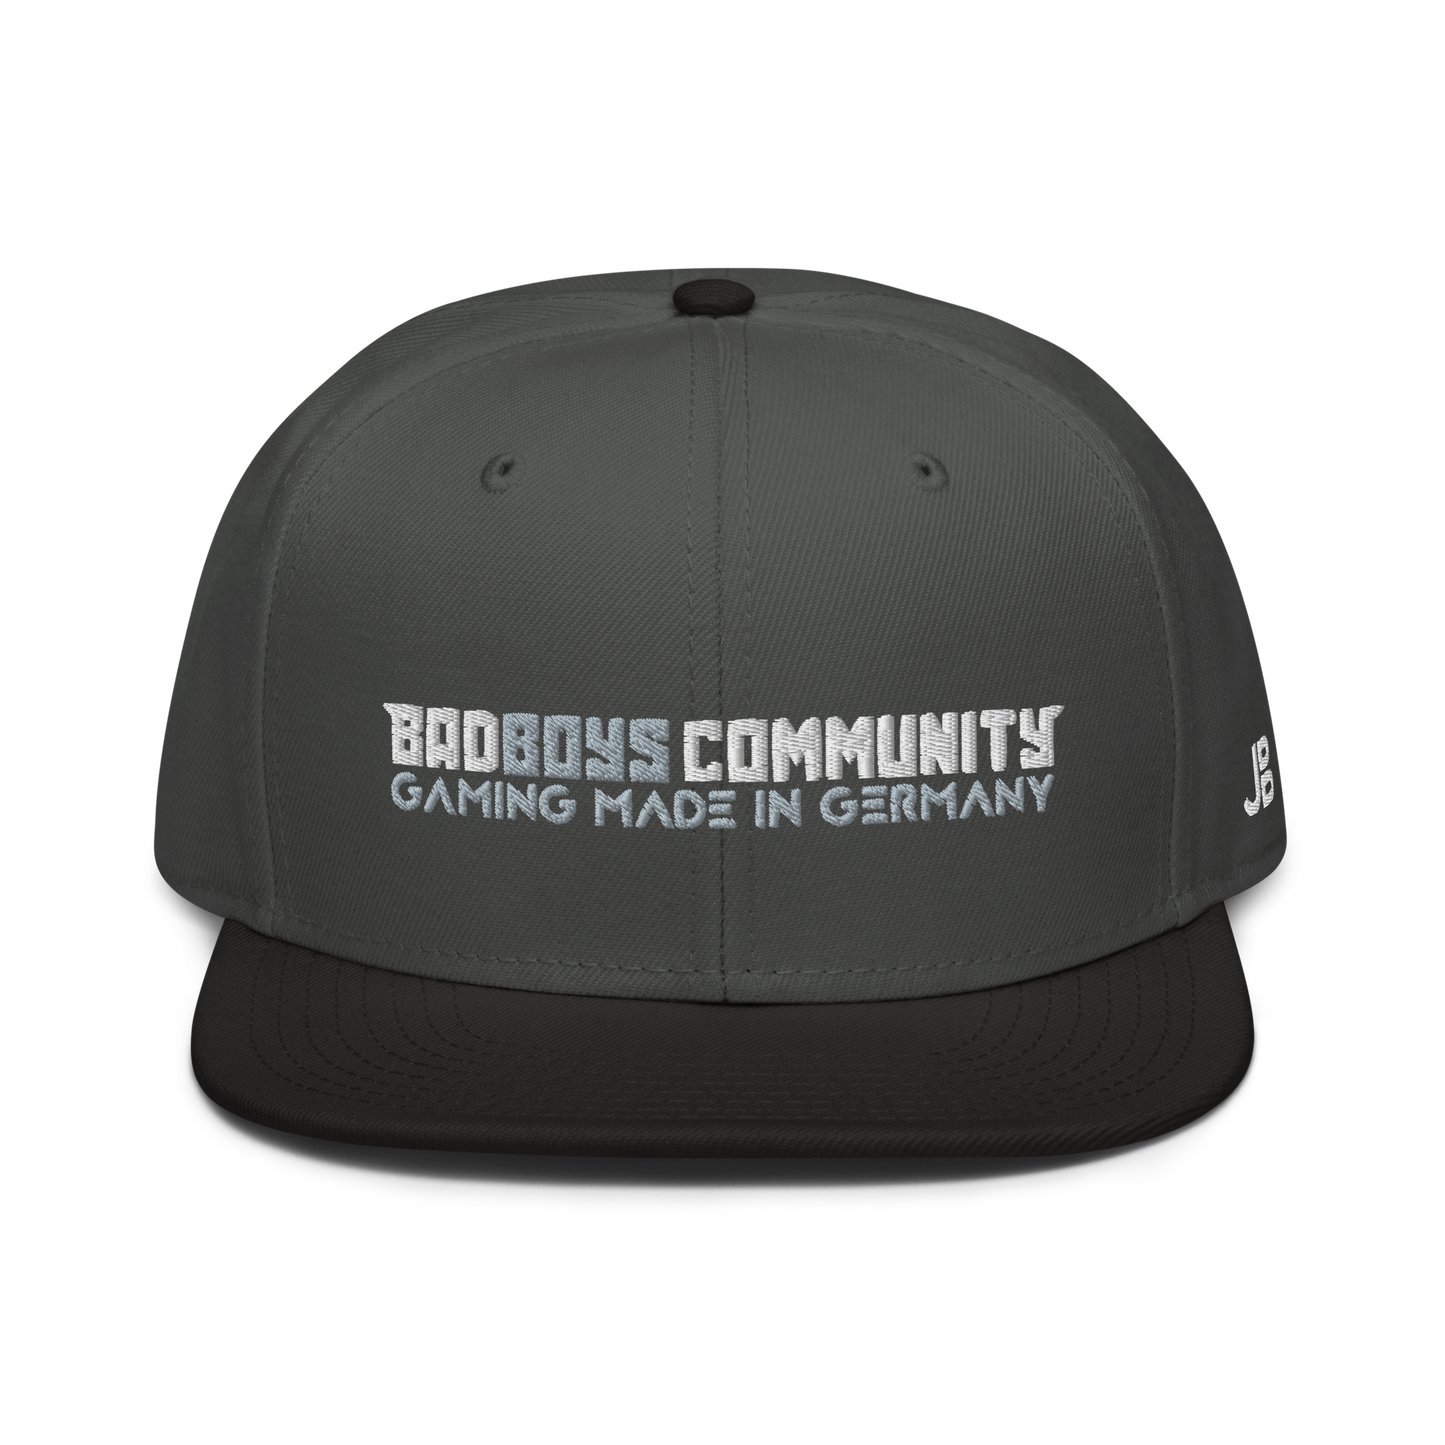 BAD BOYS COMMUNITY - Snapback Cap